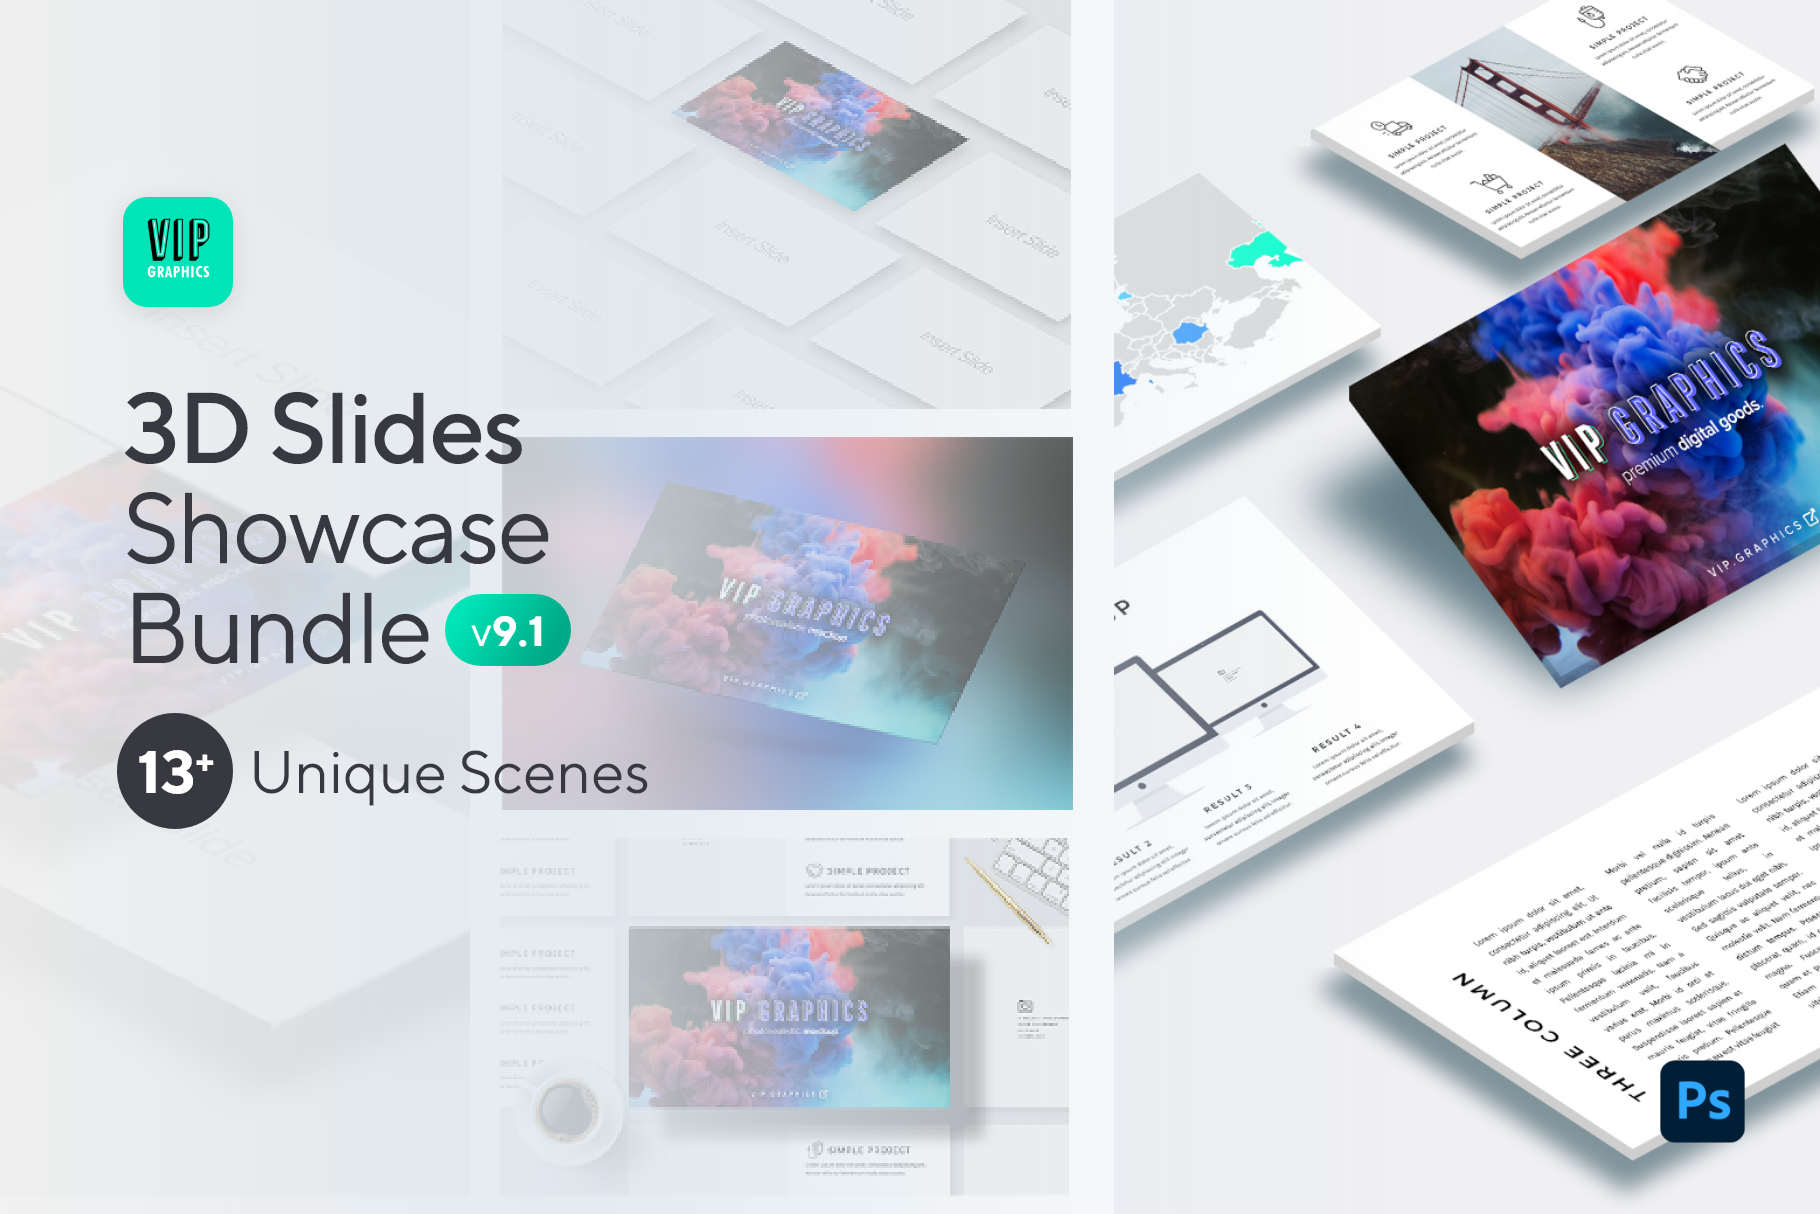 VIP.graphics - Slide Showcase Bundle